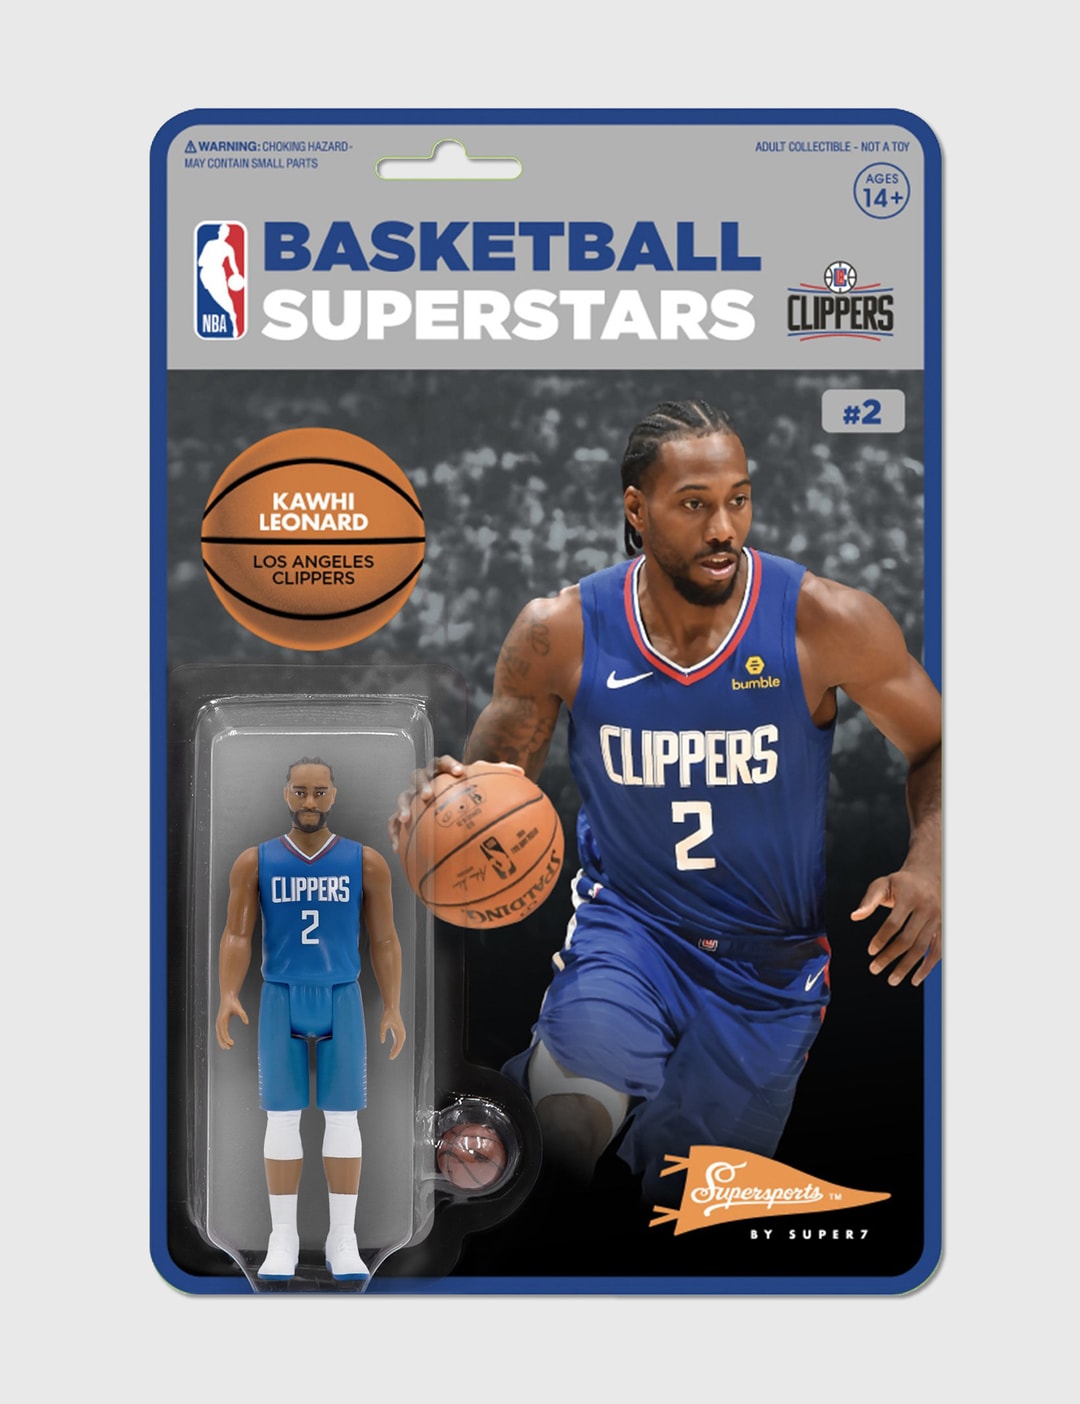 NBA Supersports Figure – Kawhi Leonard Placeholder Image